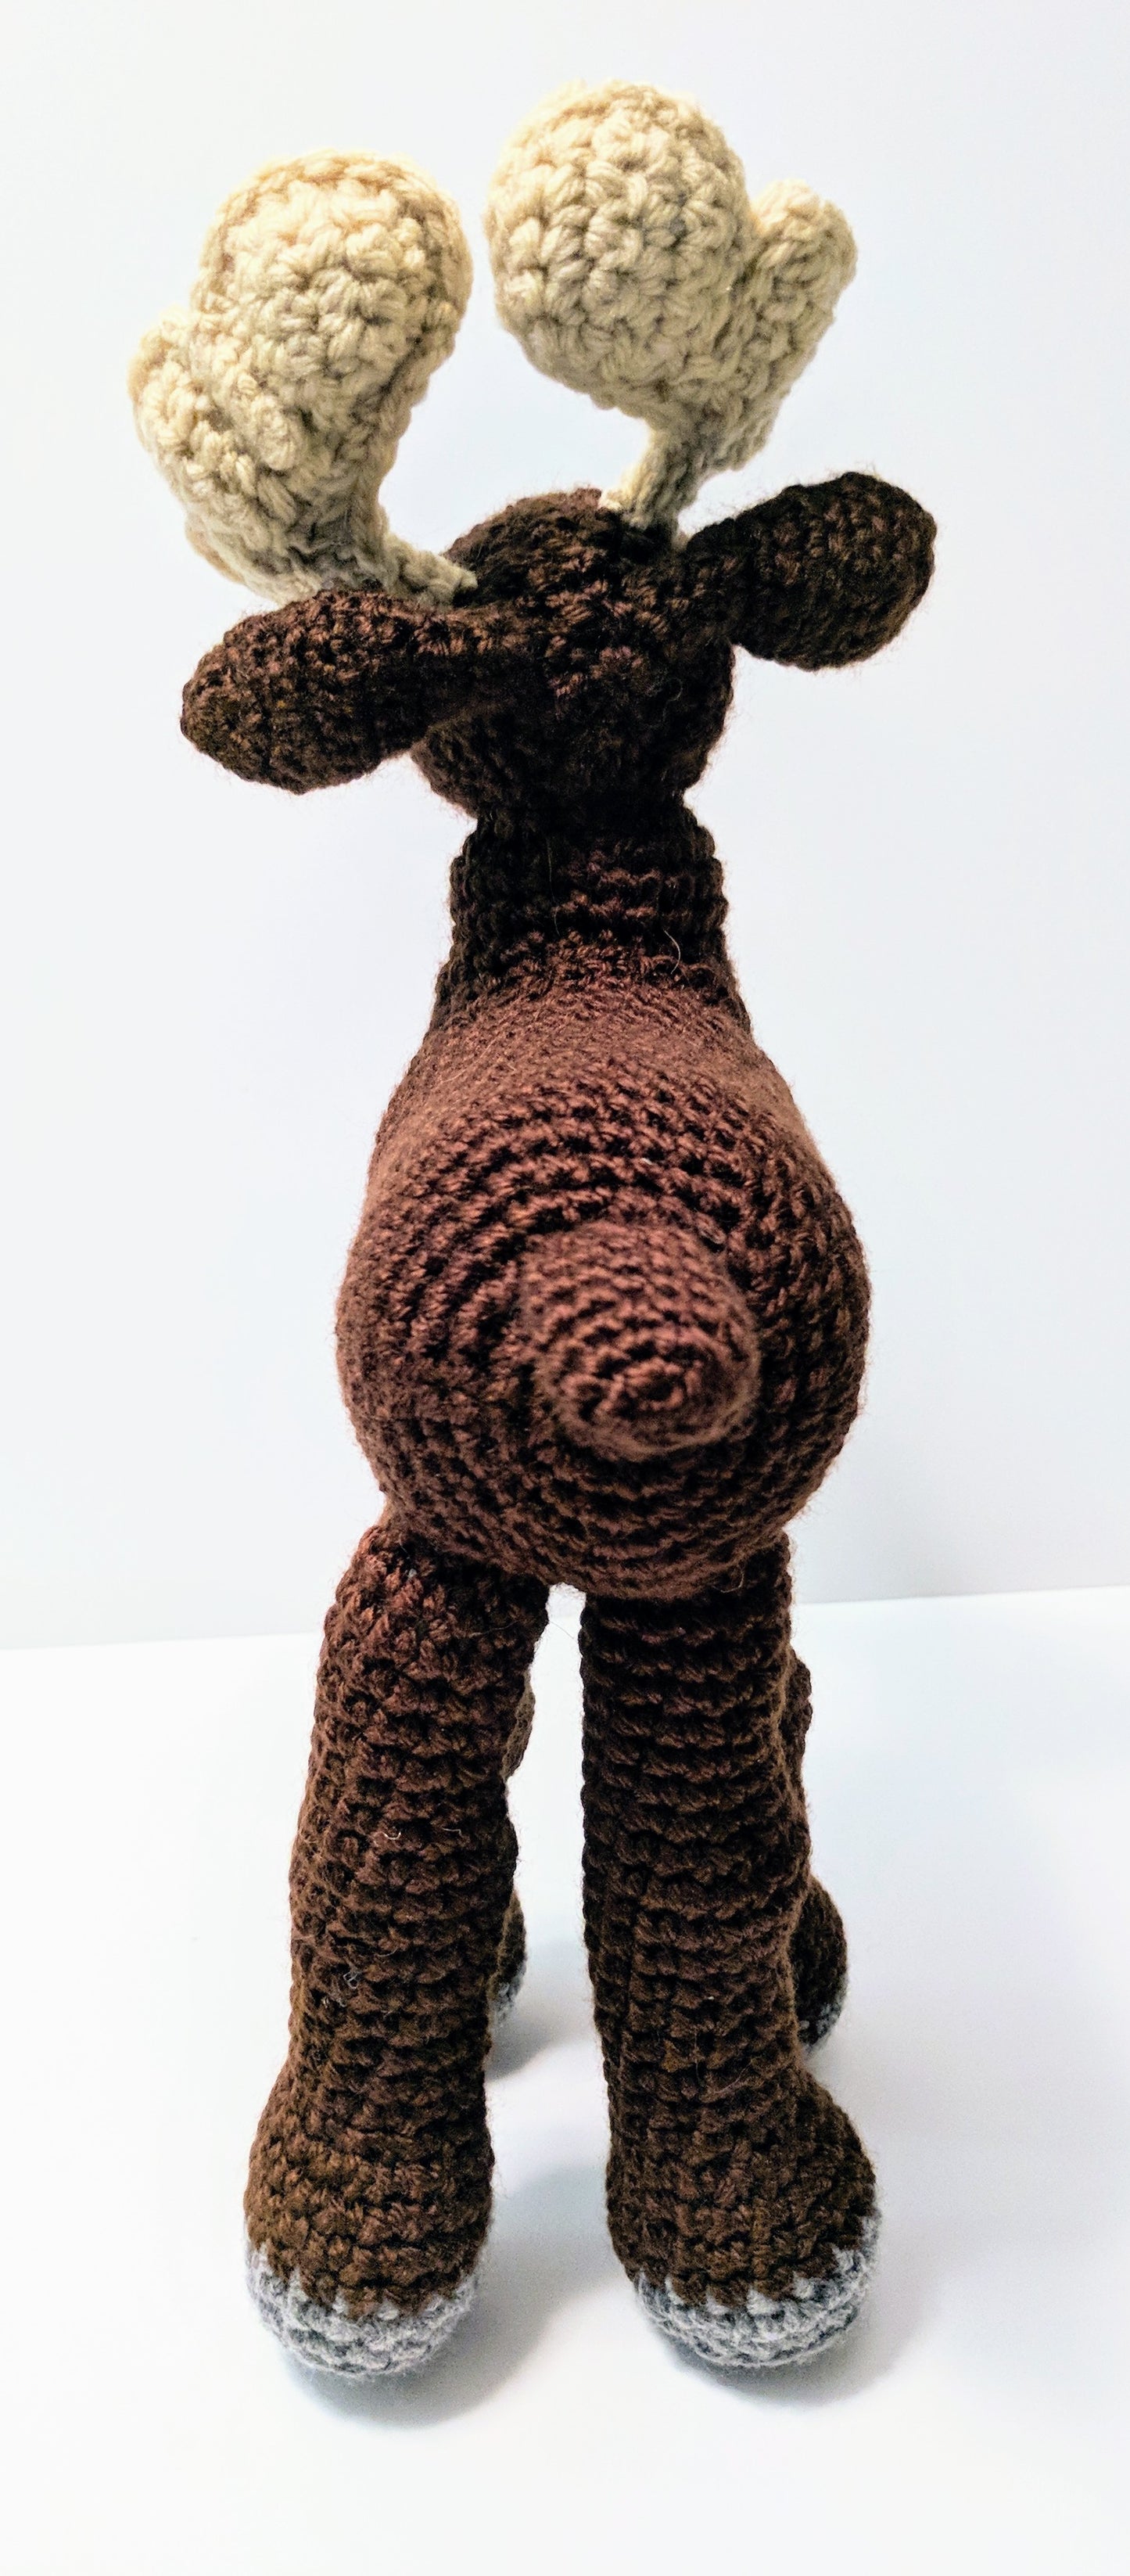 Chris Moose Crochet Pattern